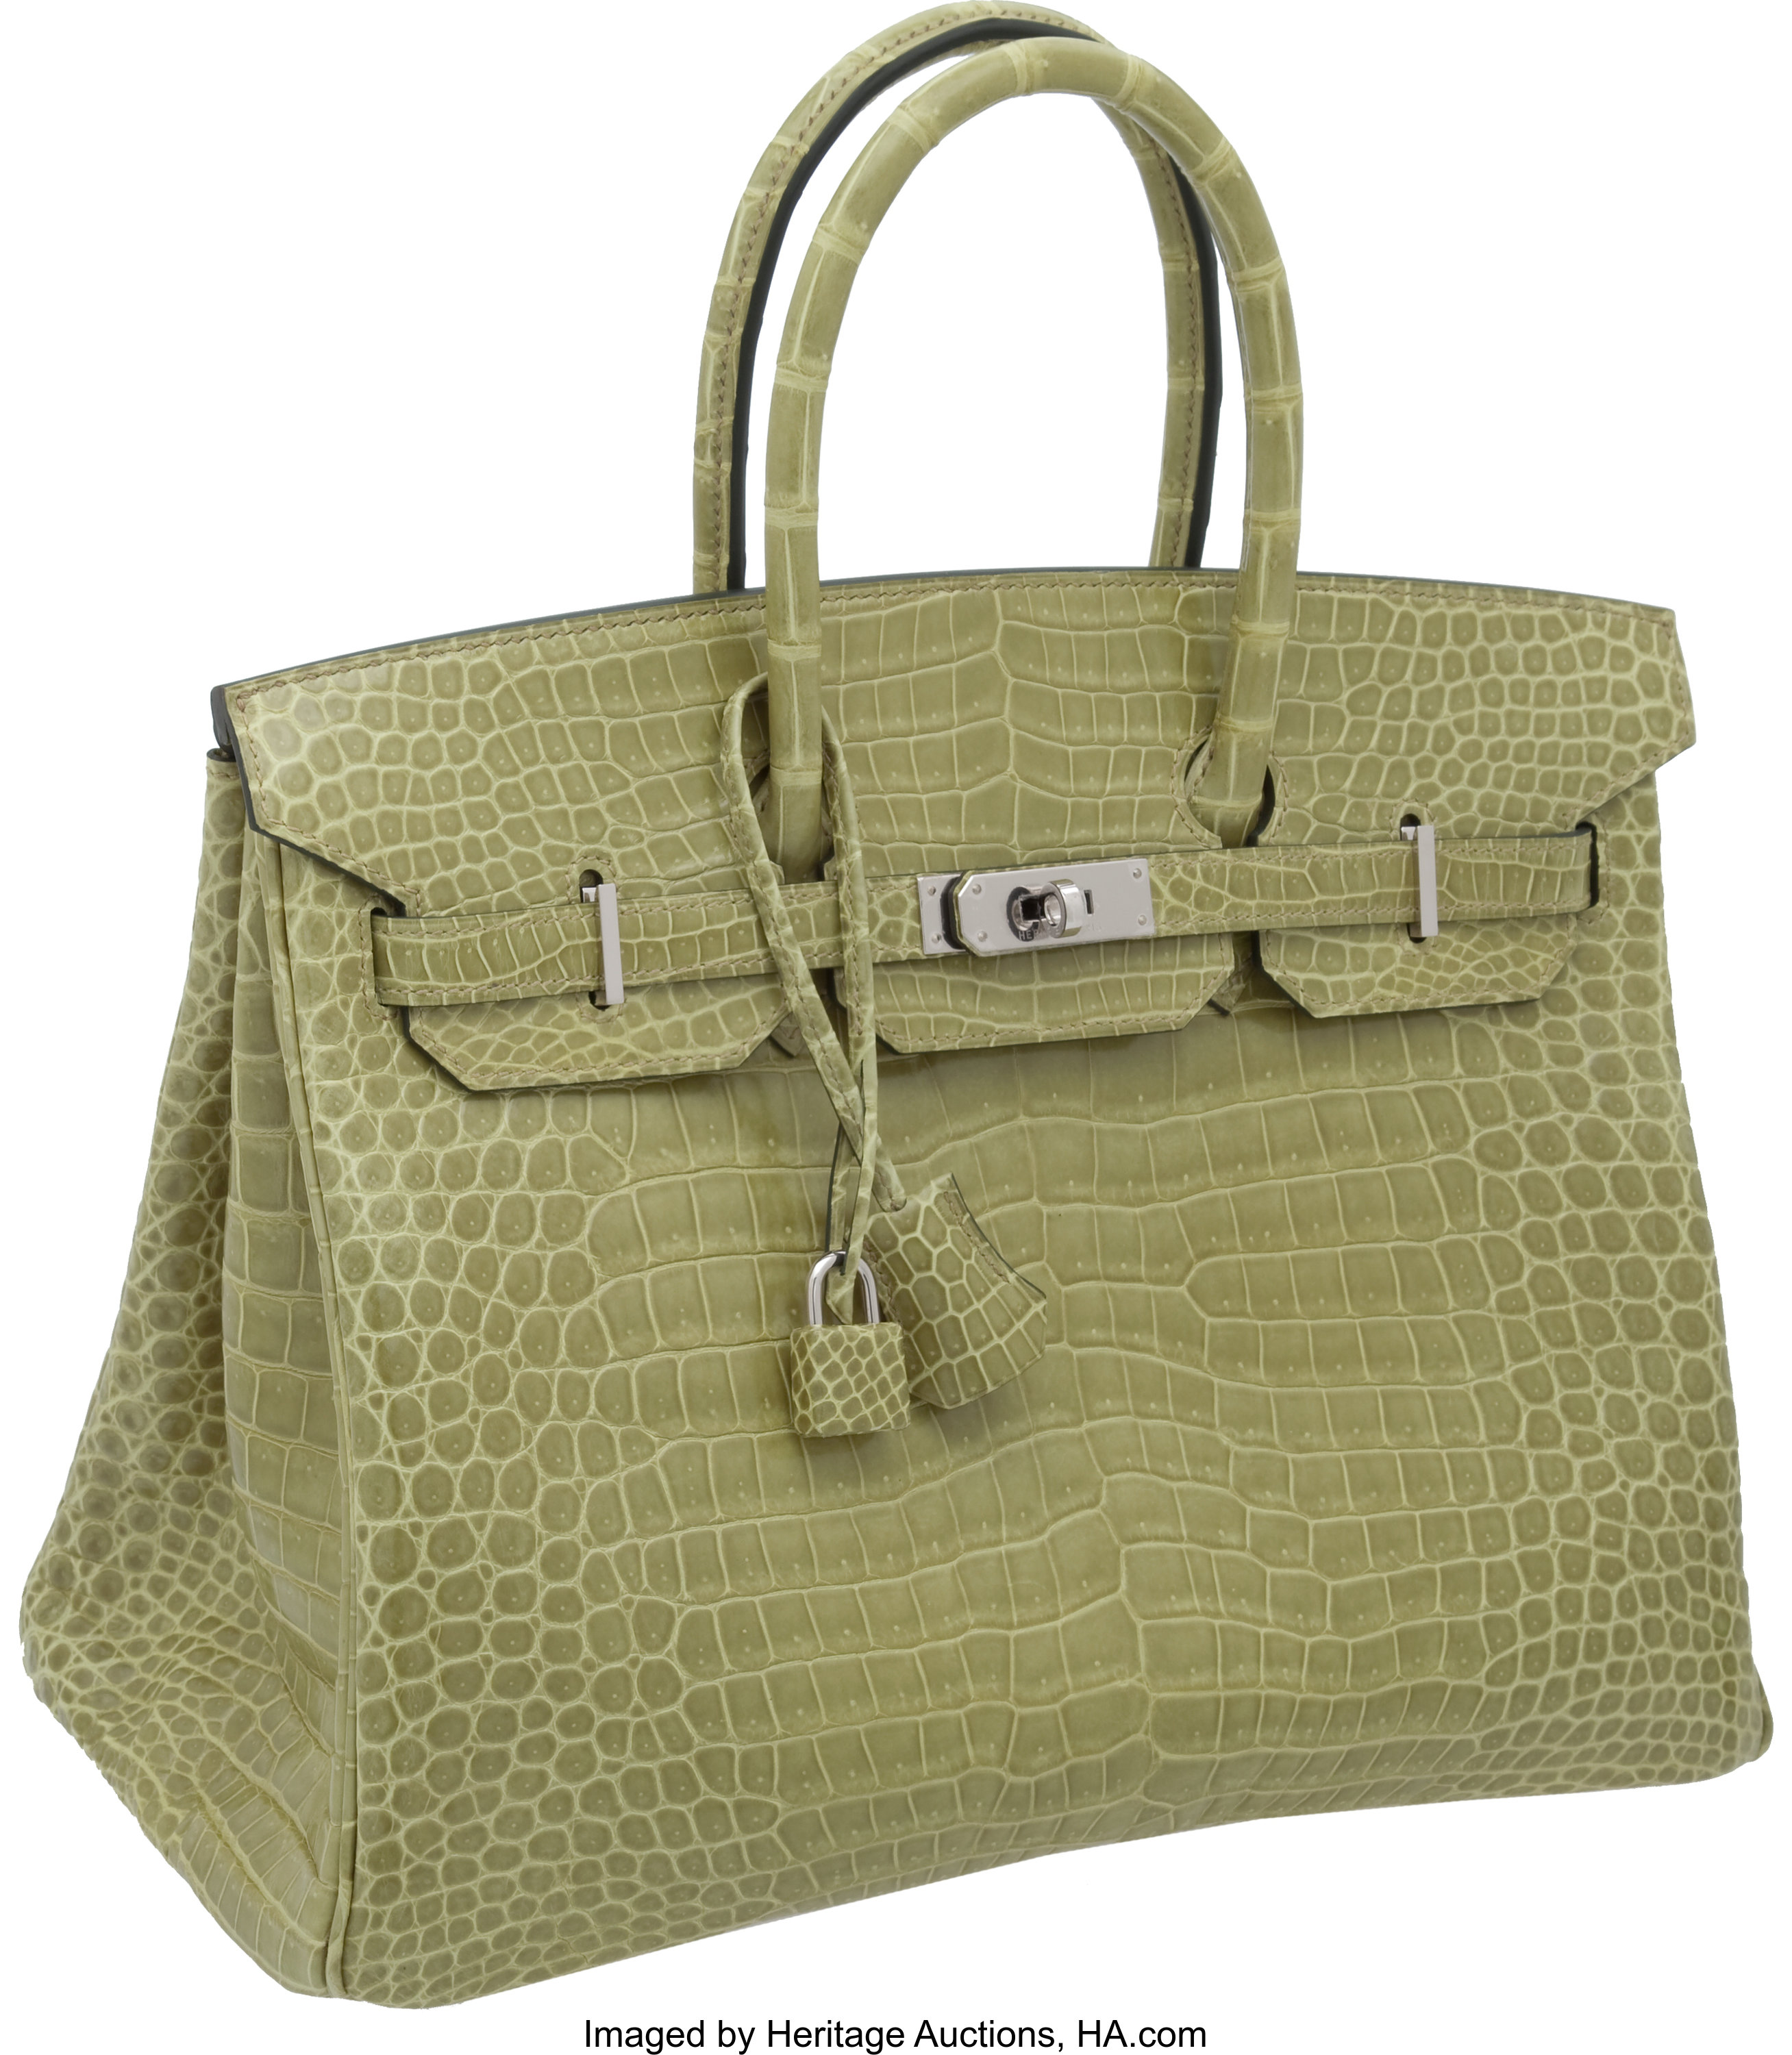 Hermes 35cm Shiny Vert Anis Porosus Crocodile Birkin Bag with